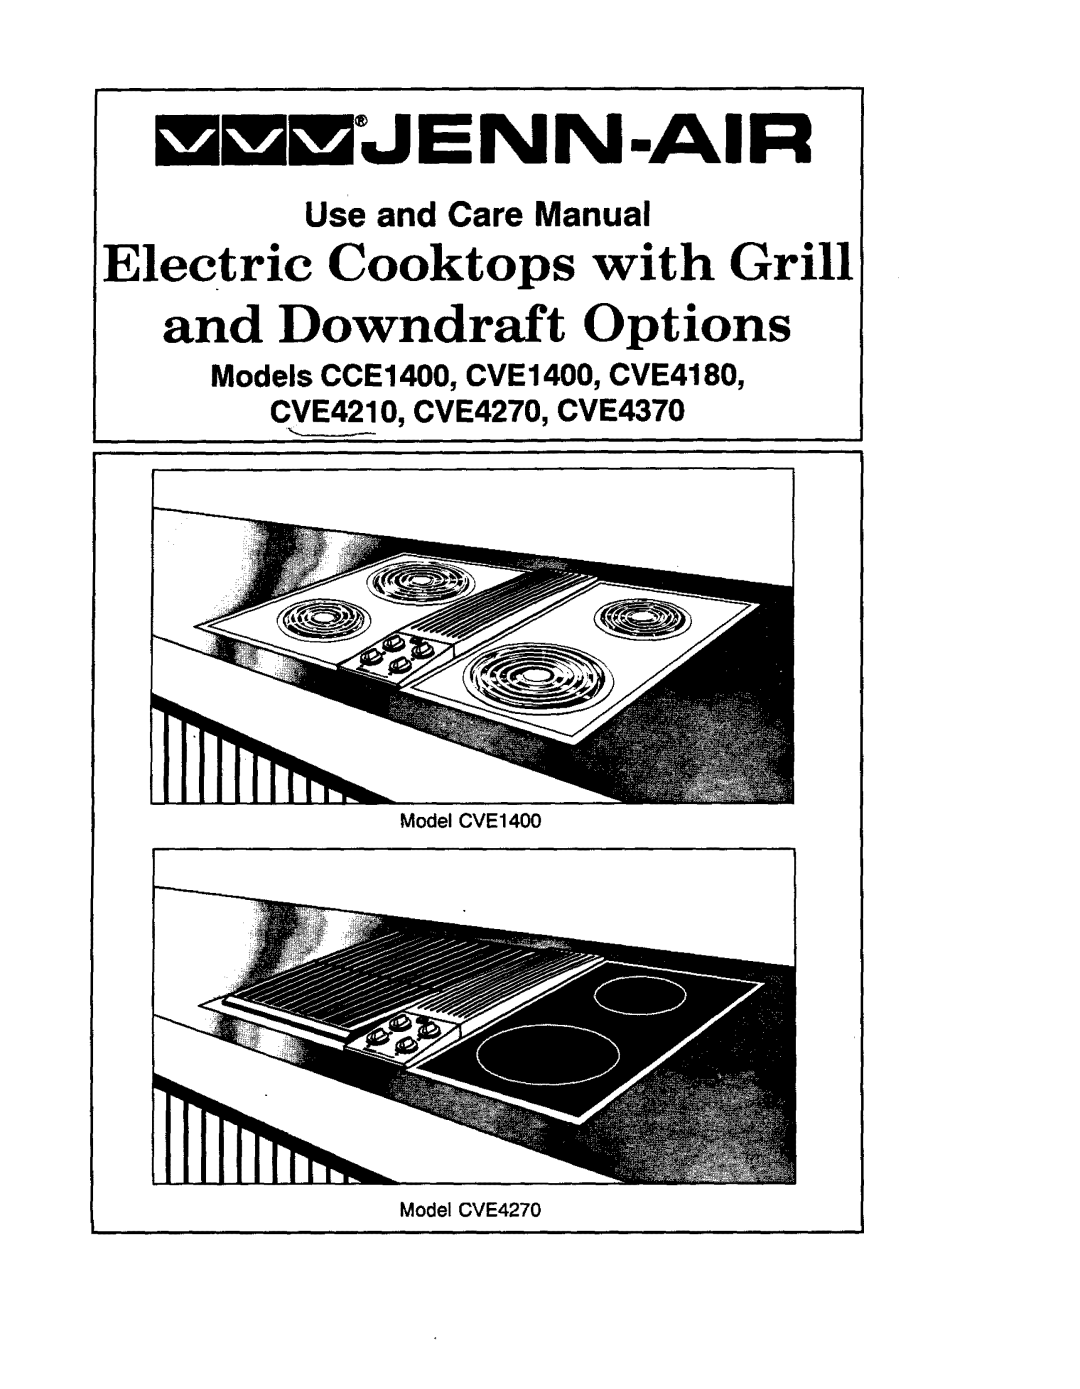 Jenn-Air CVE4180, CVE4370 manual mmmJENN-AIR, Electric Cooktops with Grill, and Downdraft Options, Use and Care Manual 